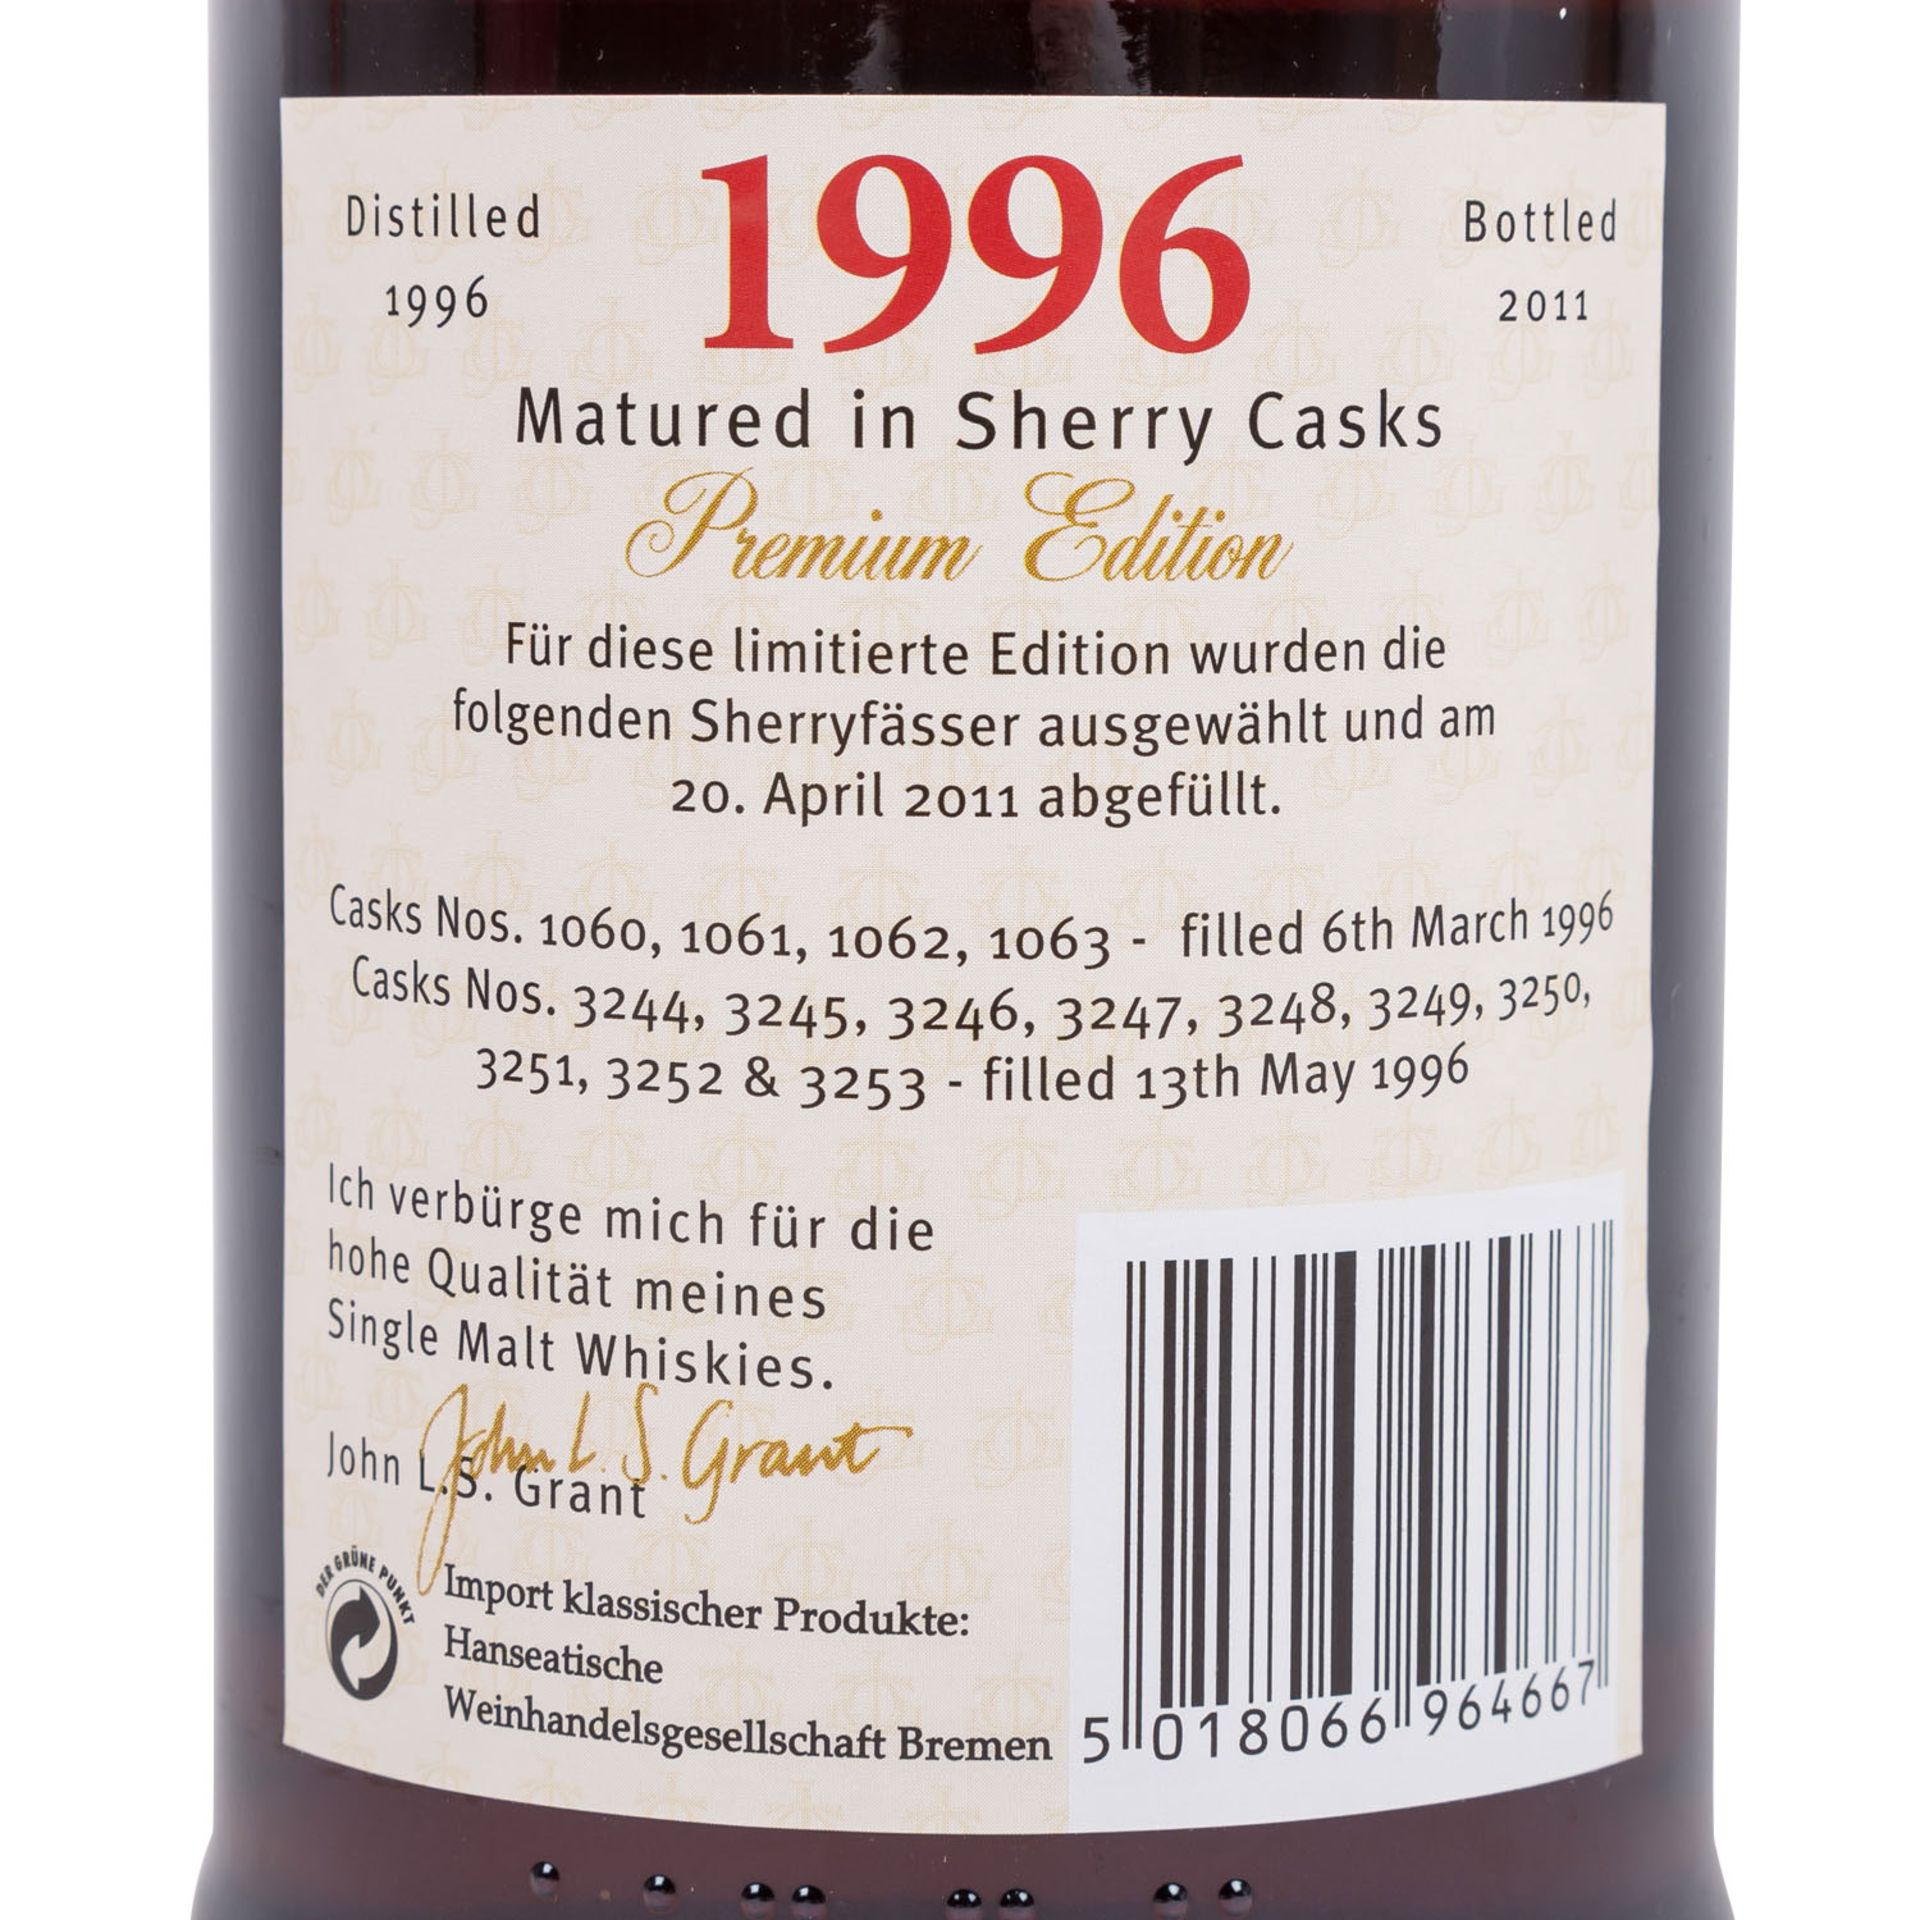 GLENFARCLAS Sherry Casks, Single Highland Malt Scotch Whisky 1996 Premium Edition - Image 4 of 8